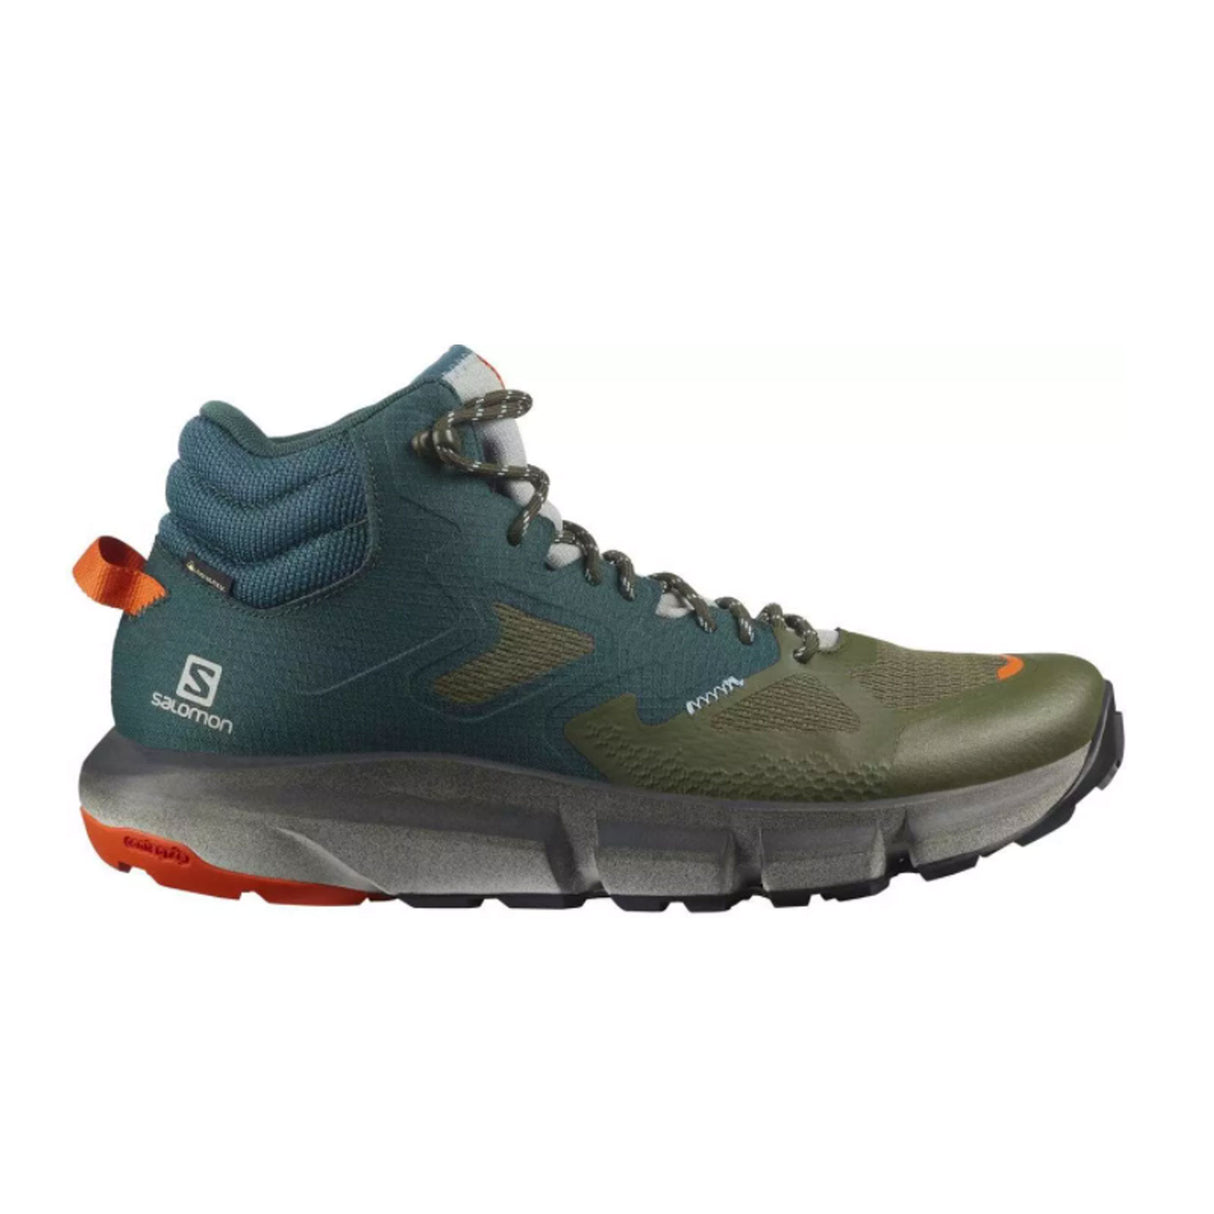 Salomon Predict Hike Mid GTX Hiking Boot (Men) - Ponderosa/Olive Night/Red Orange Boots - Hiking - Mid - The Heel Shoe Fitters